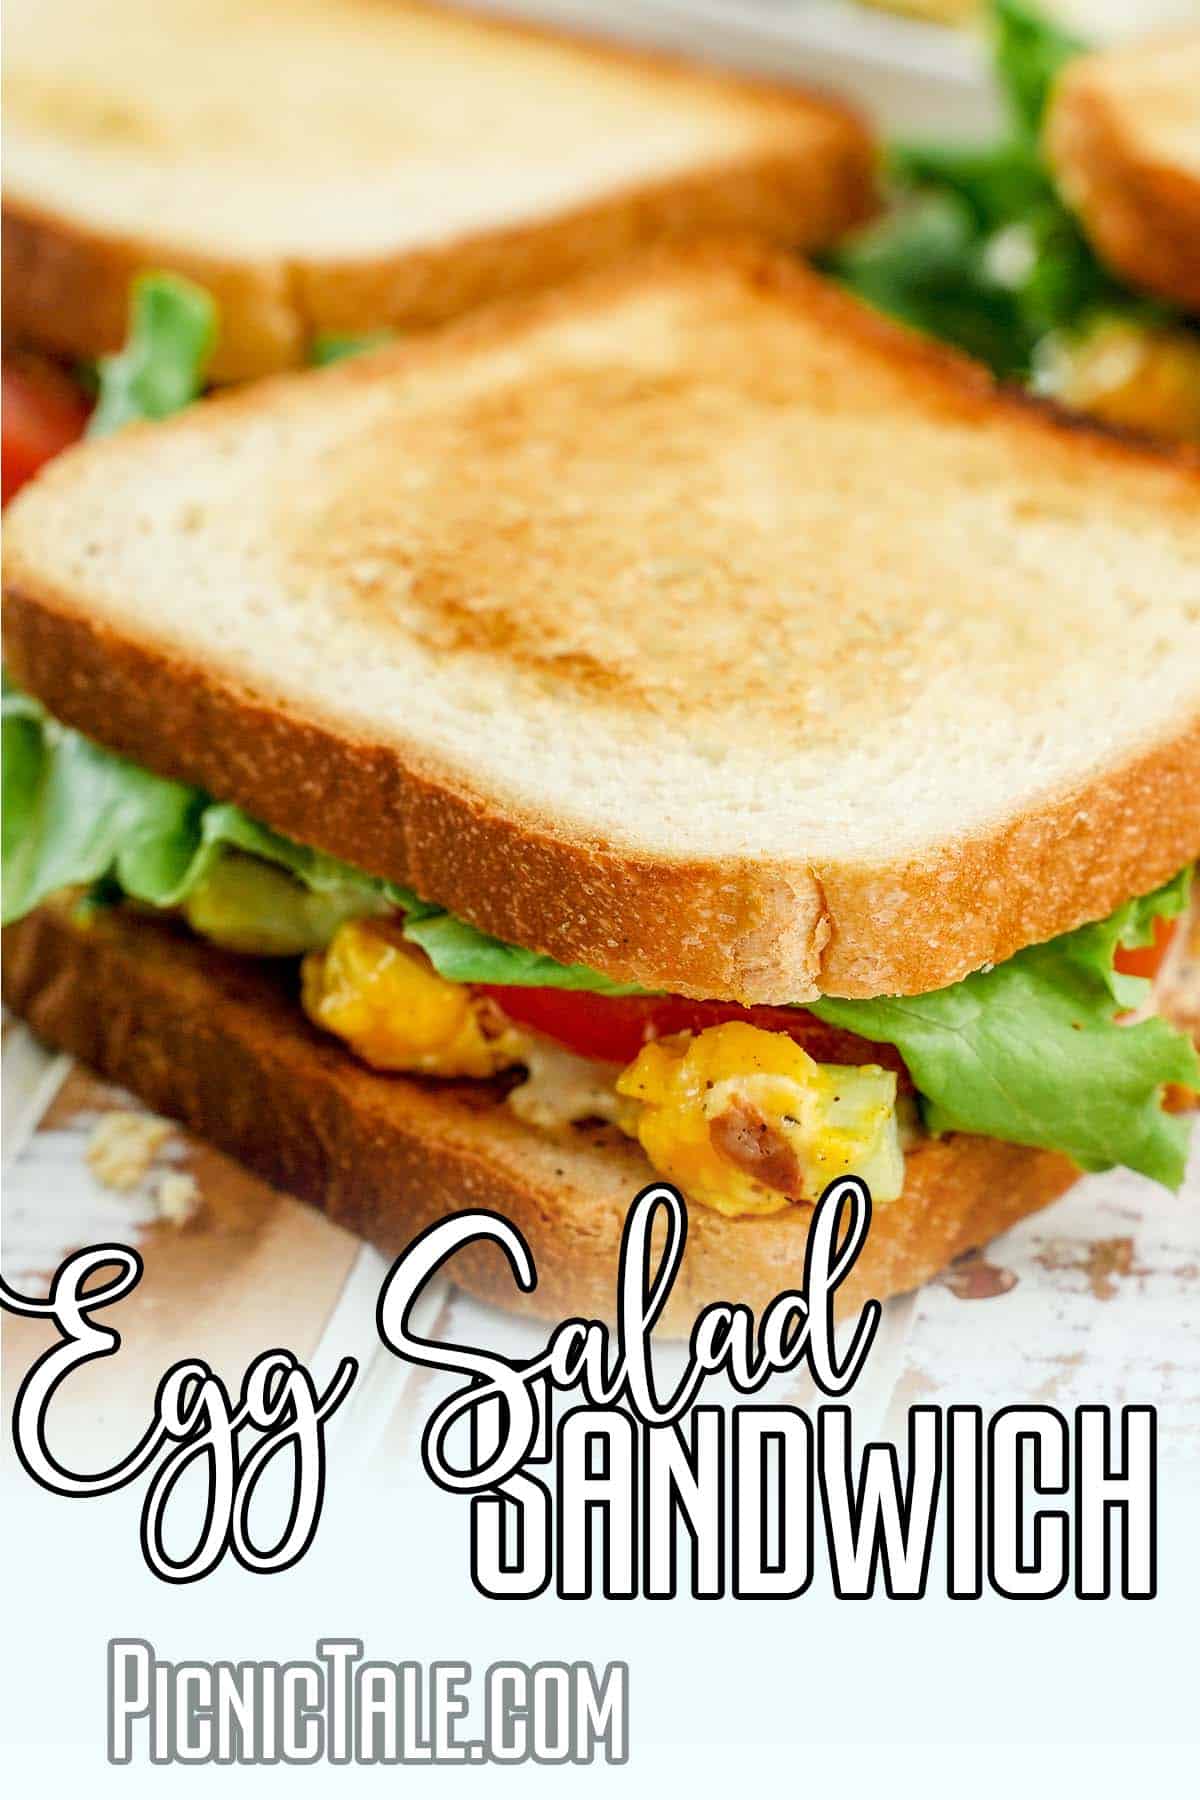 Egg Salad Sandwich, wording on bottom.